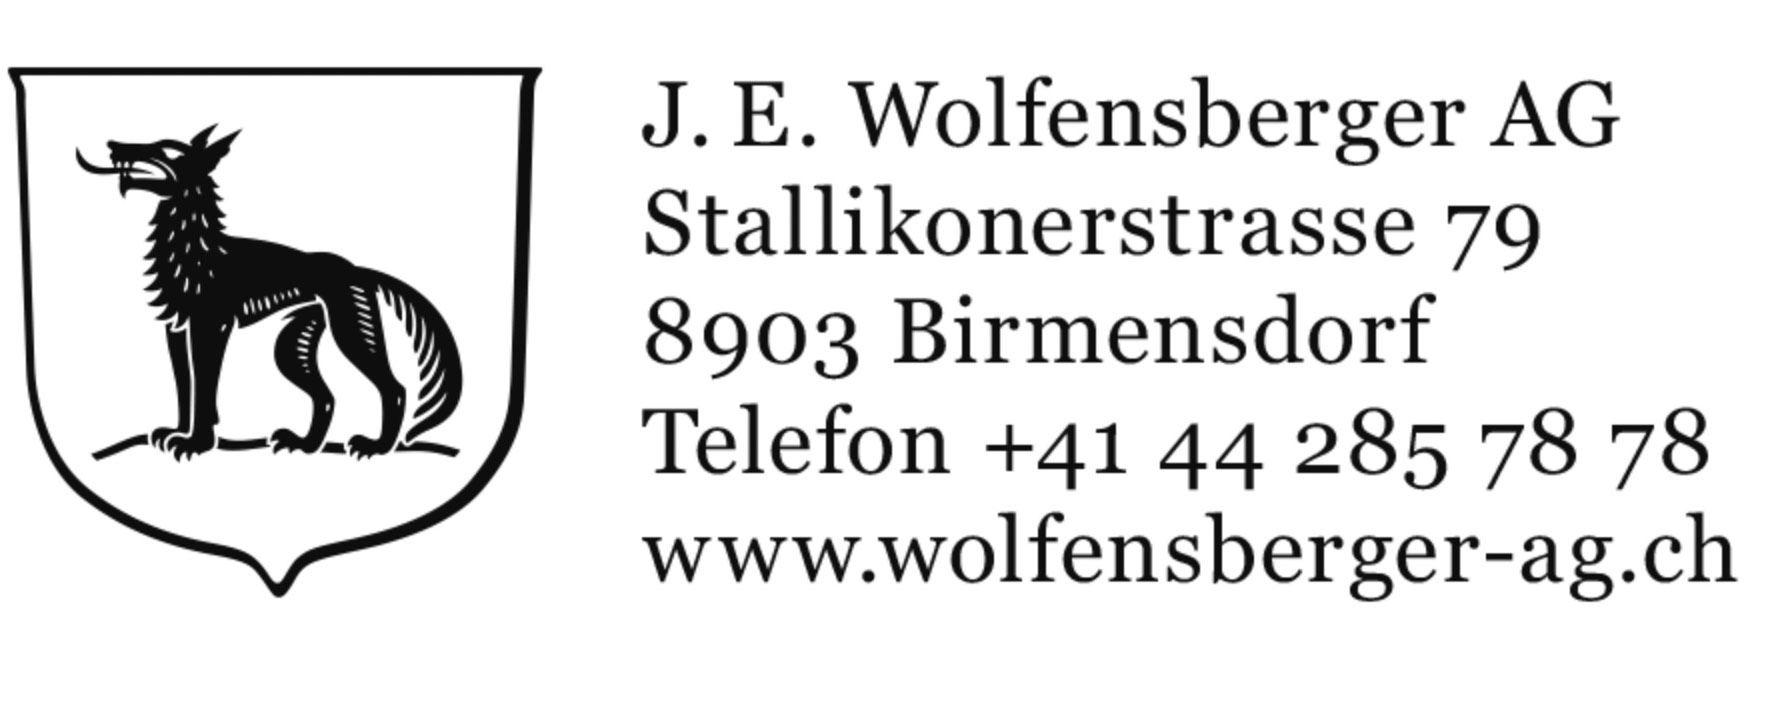 image-11899721-Wolfensberger_Logo-c20ad.w640.jpg